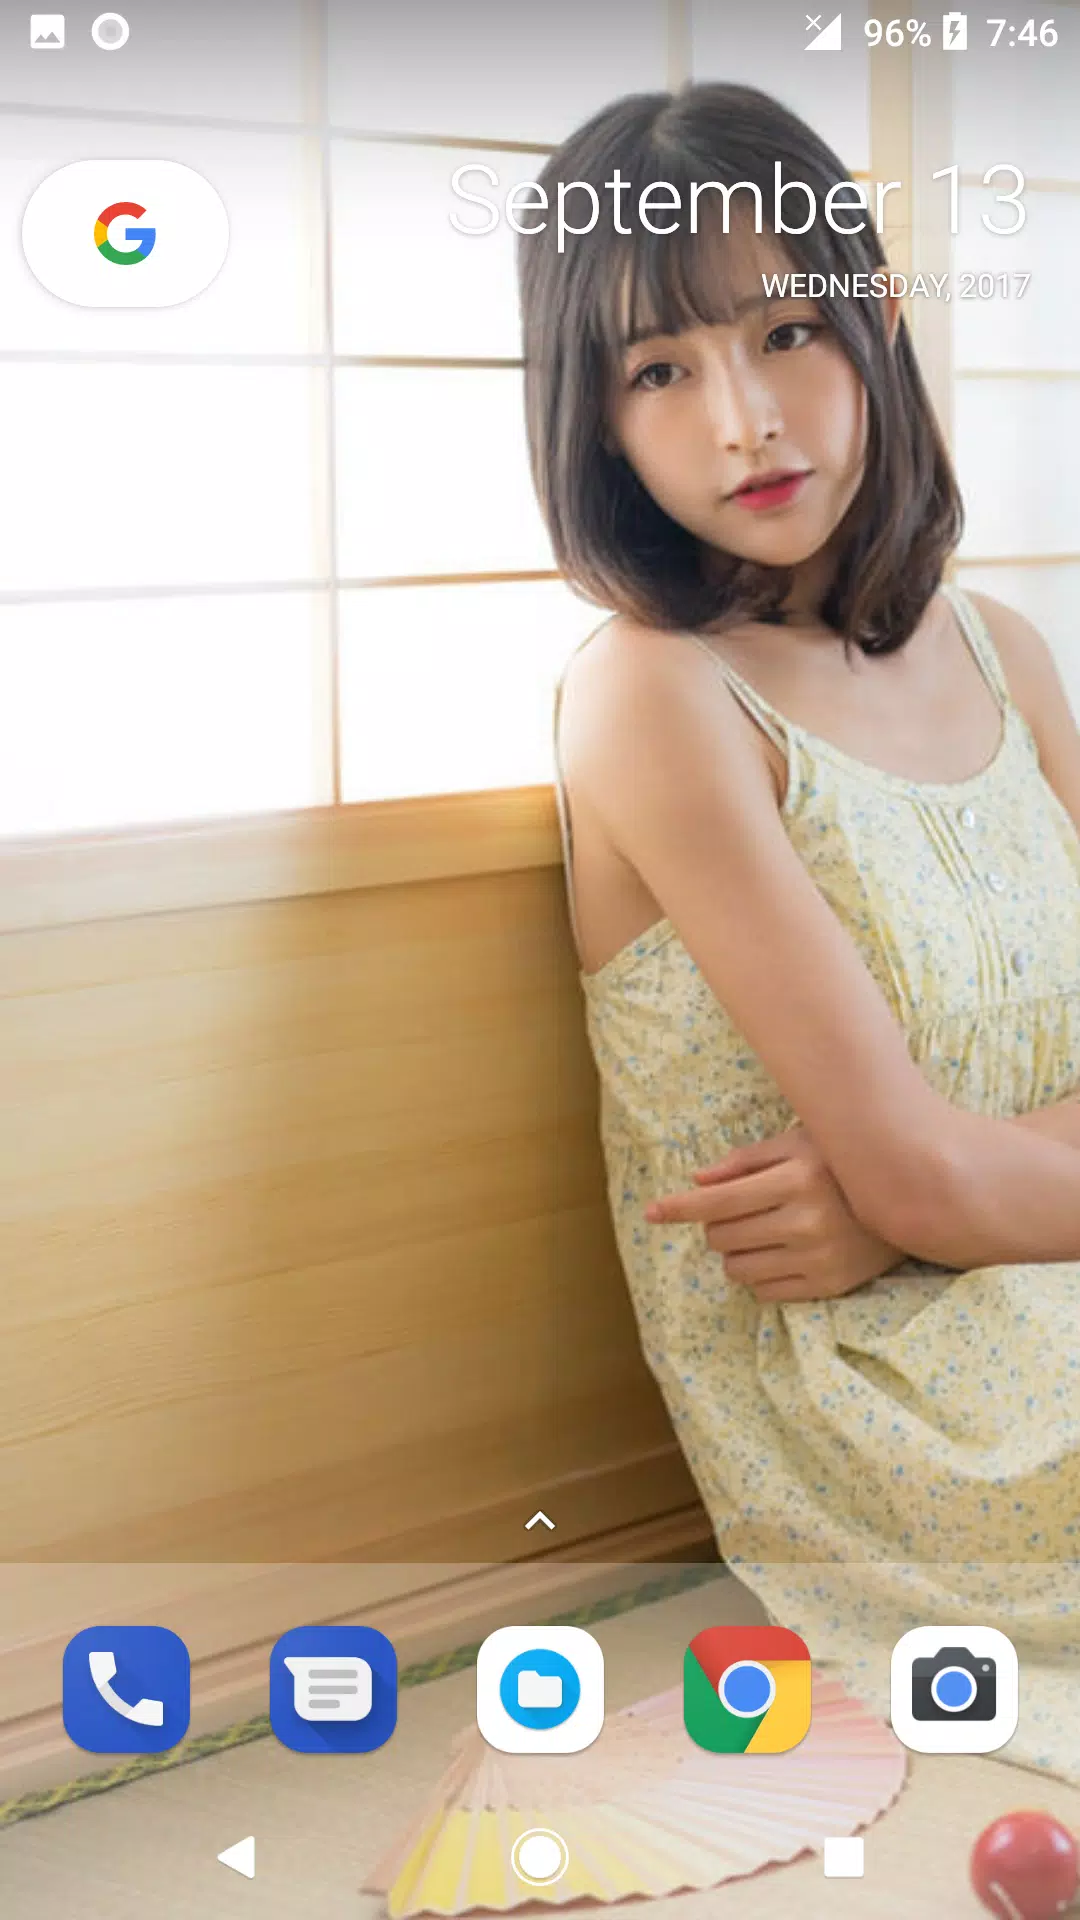 Hot Japanese Girl Wallpapers and Photos - HD APK für Android herunterladen